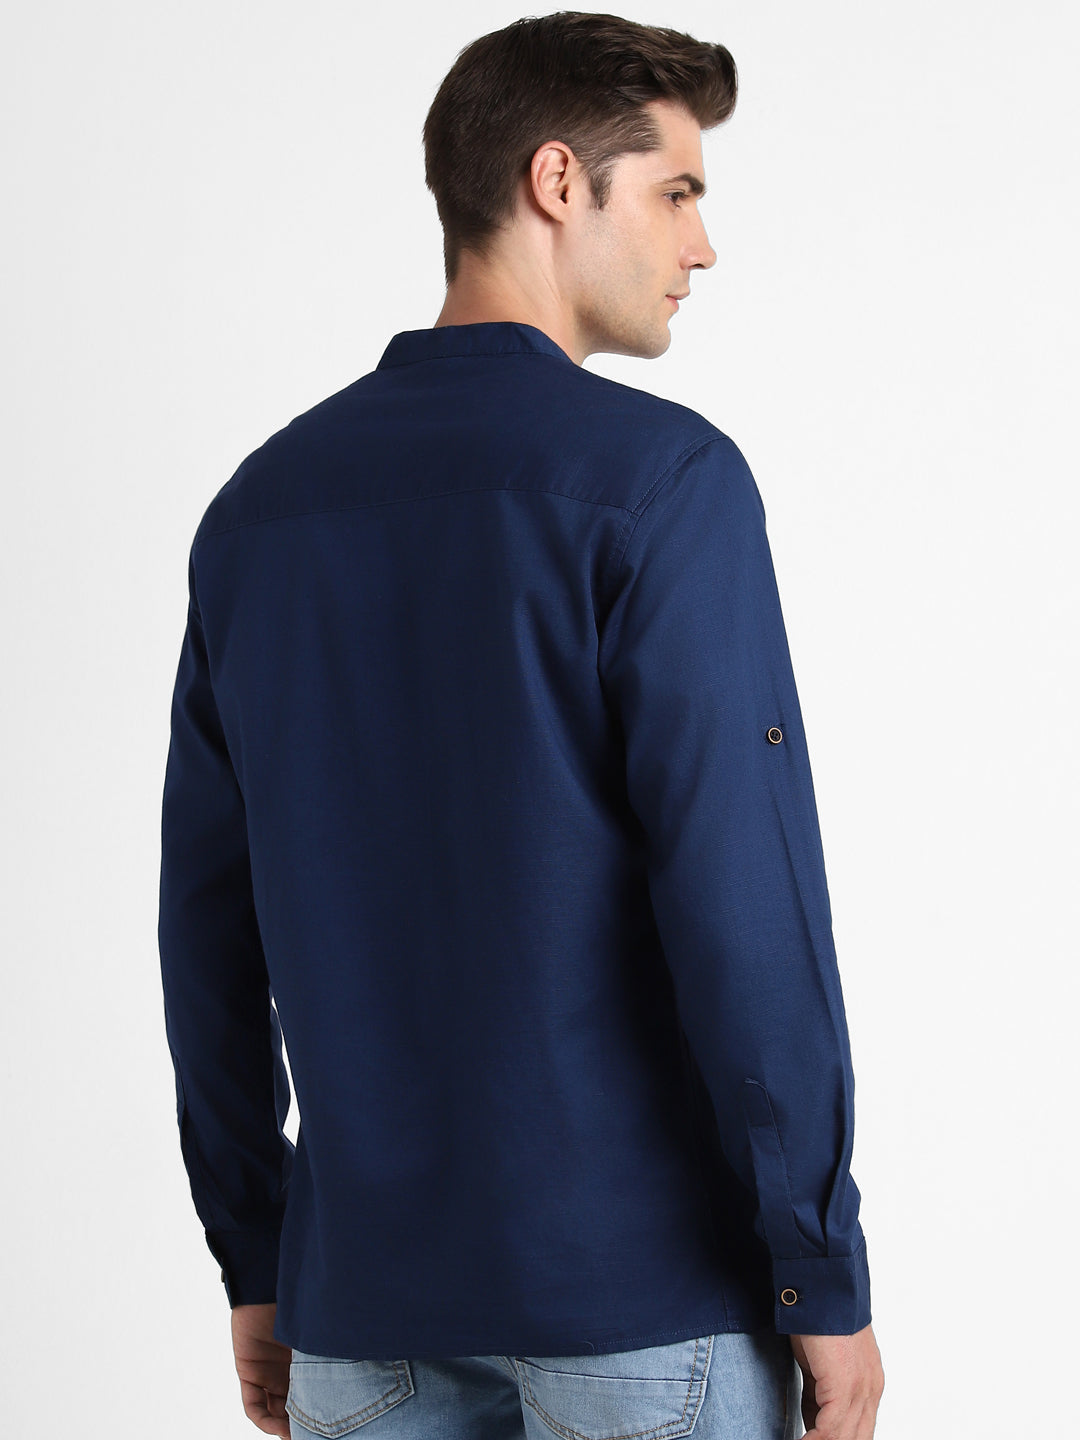 Urbano Fashion Men's Blue Cotton Full Sleeve Slim Fit Casual Solid Shirt